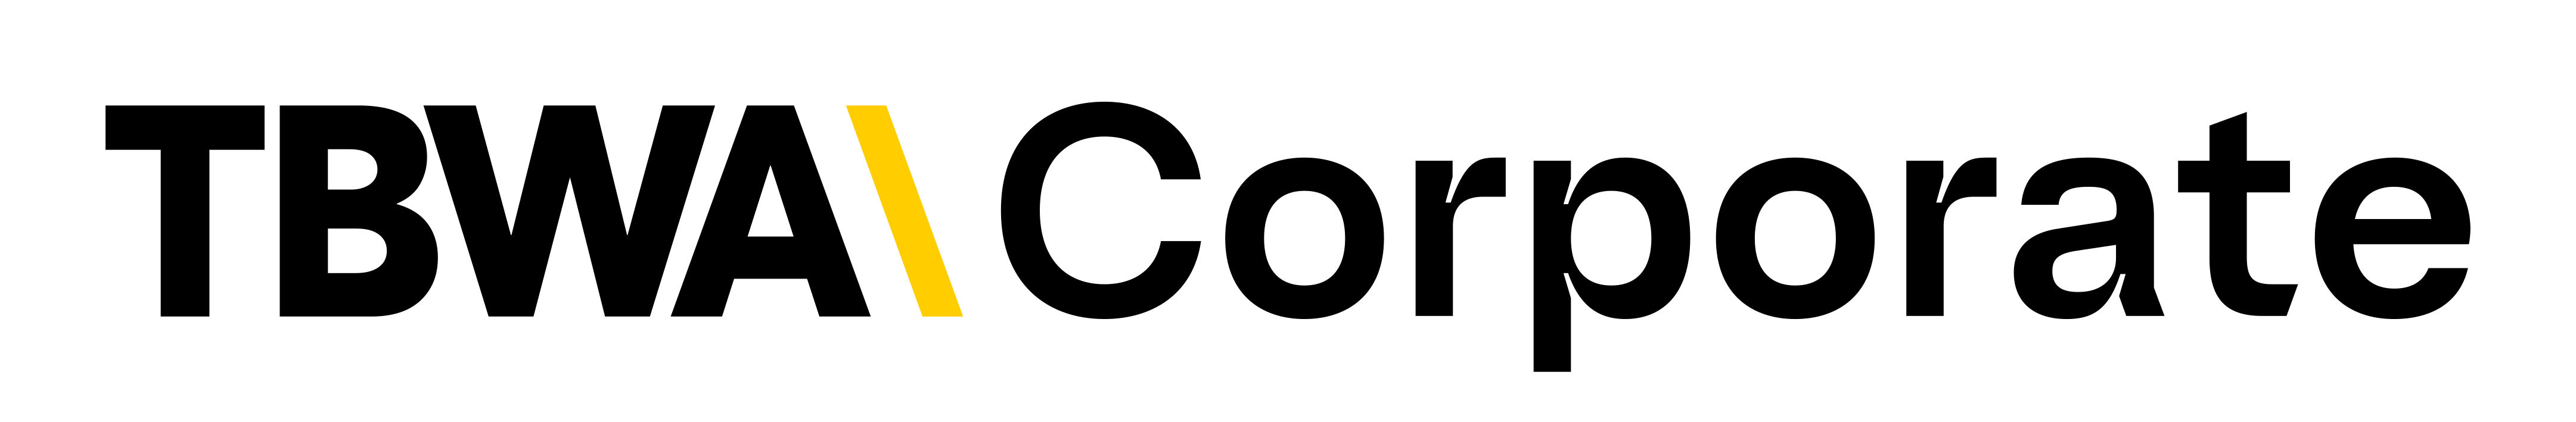 TBWA CORPORATE - LYON logo